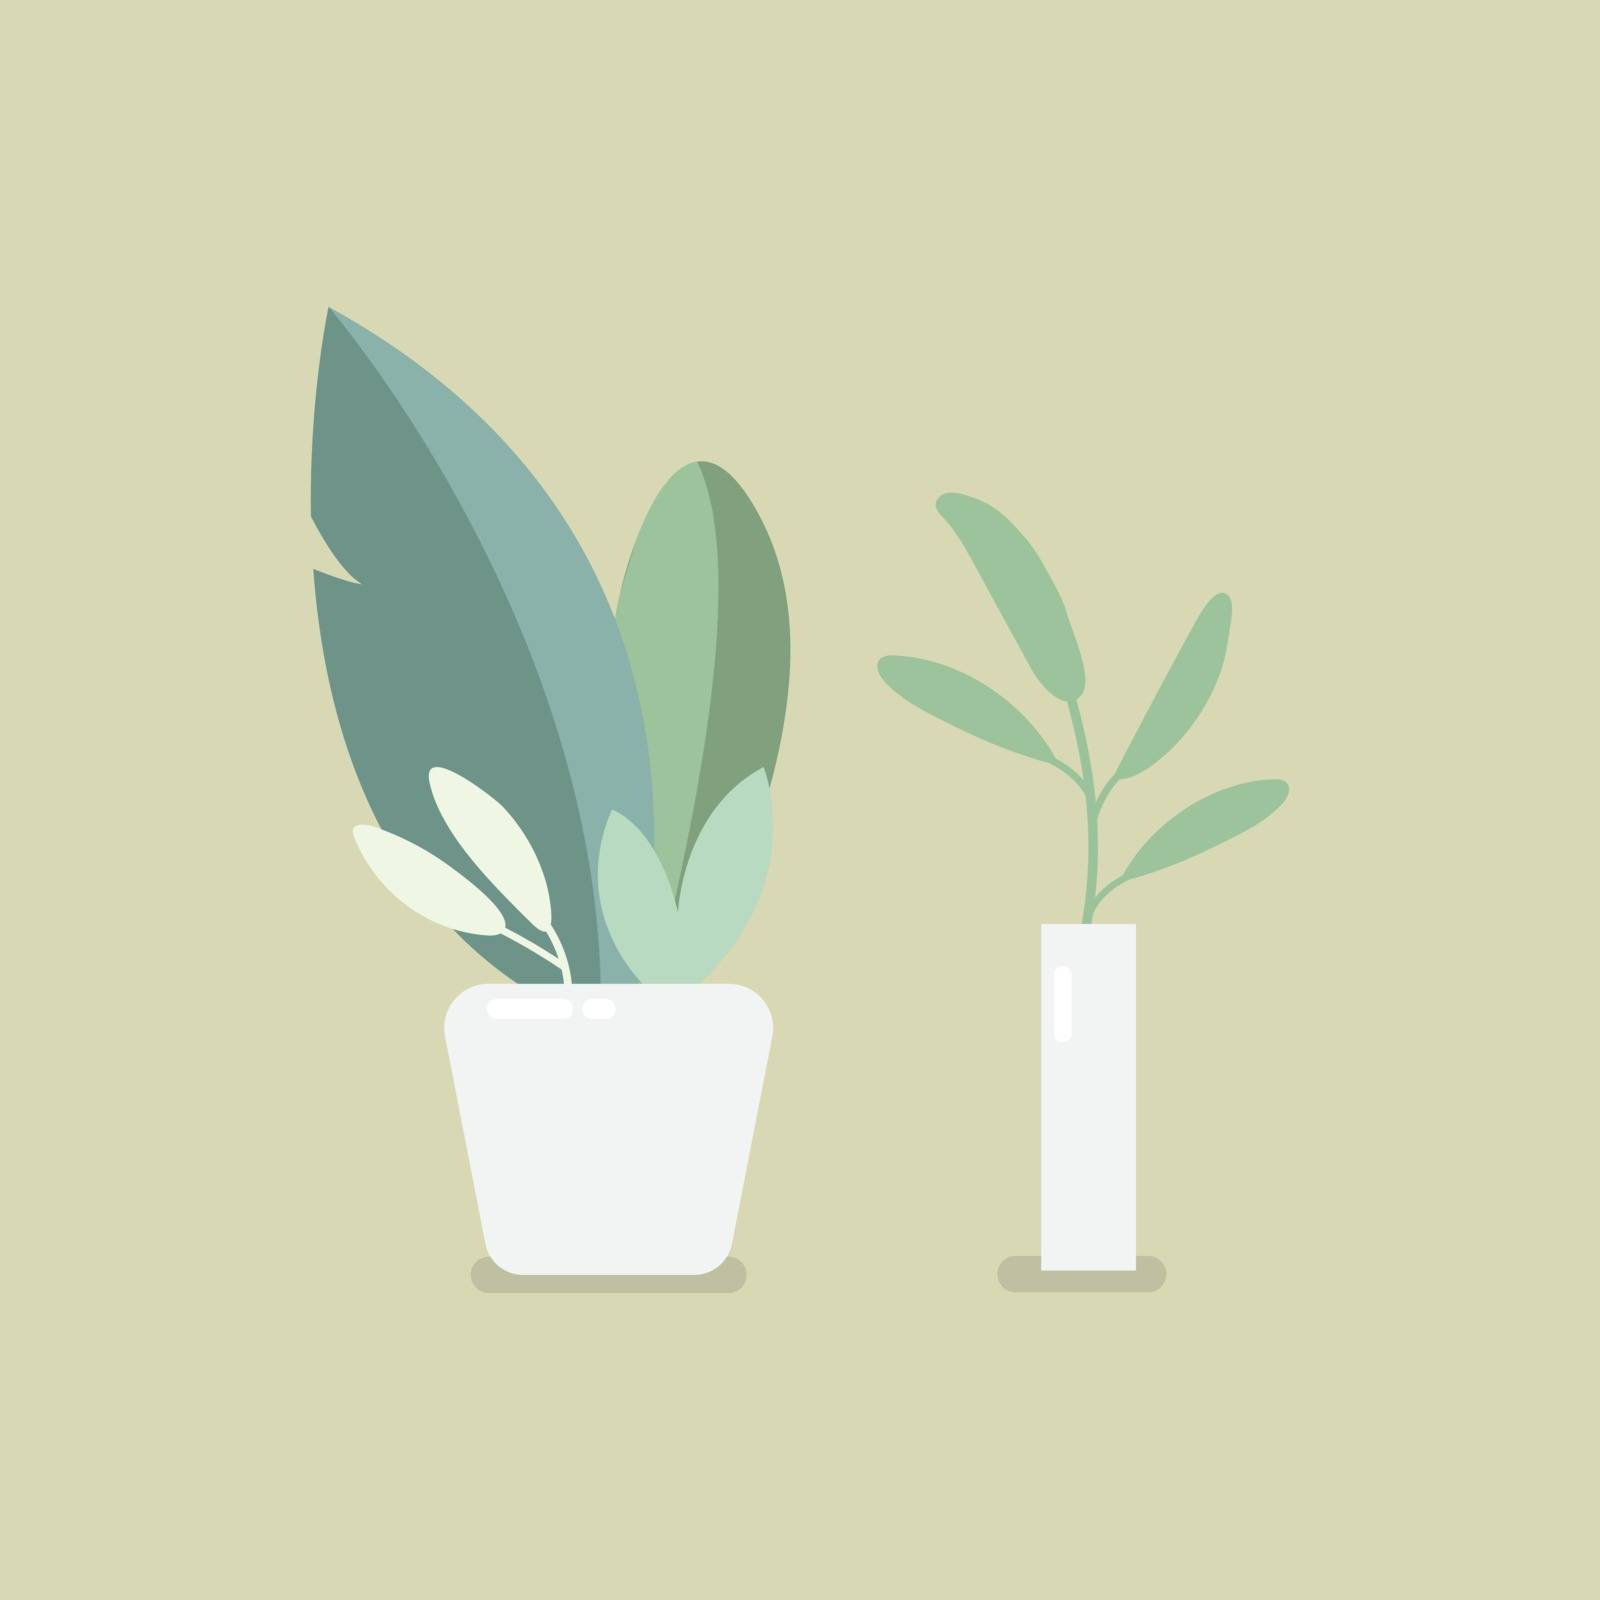 Houseplant in pot. Flat style vector illustration